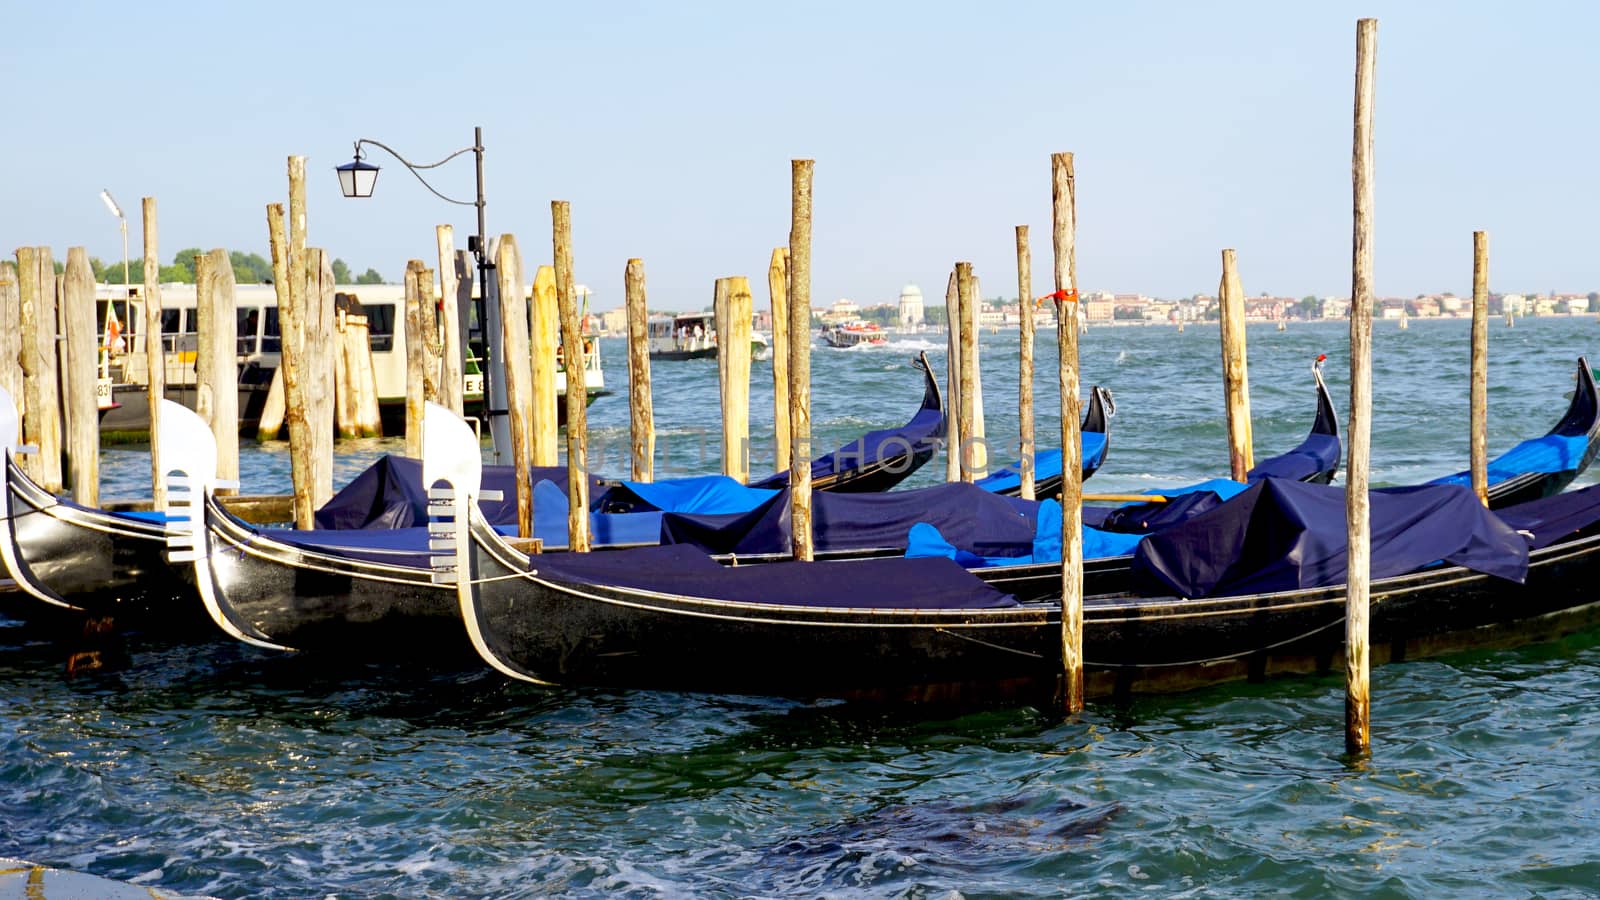 gondola boats floating in the sea in Venice, Italy